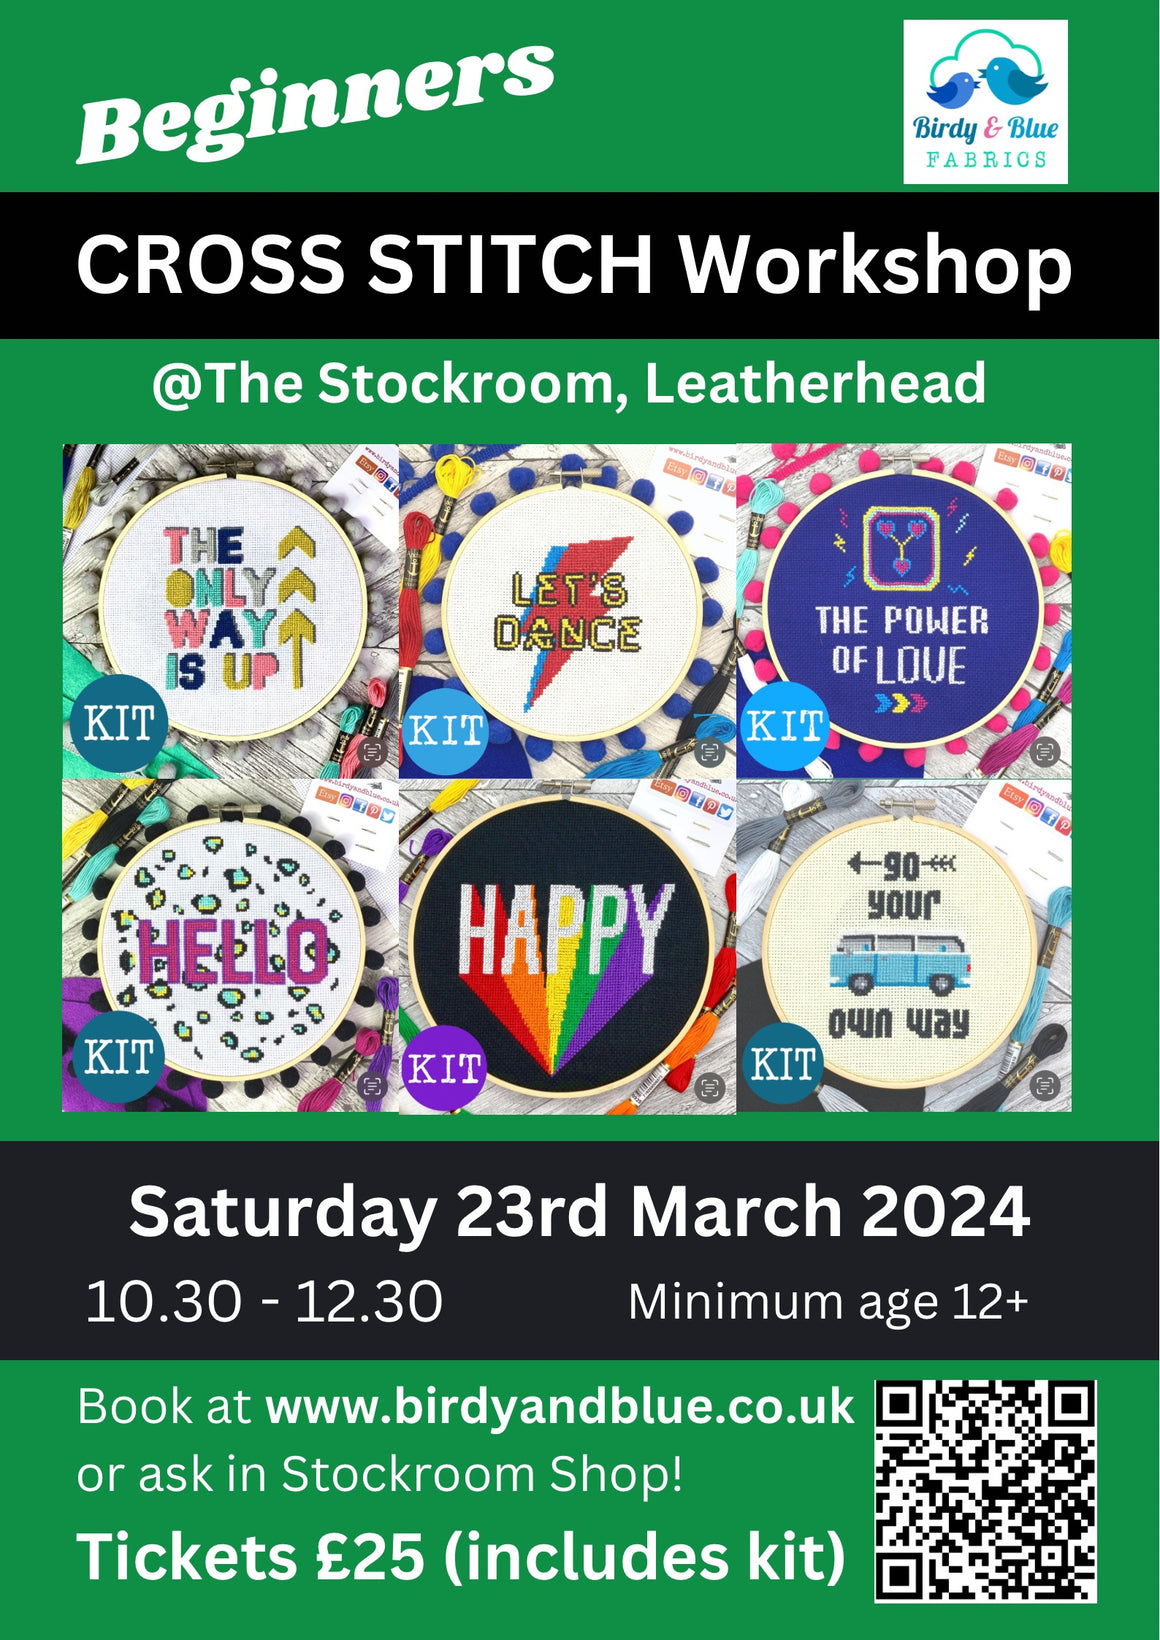 Cross Stitch Workshop - Saturday 23rd March 2024 @ The Stockroom Leatherhead